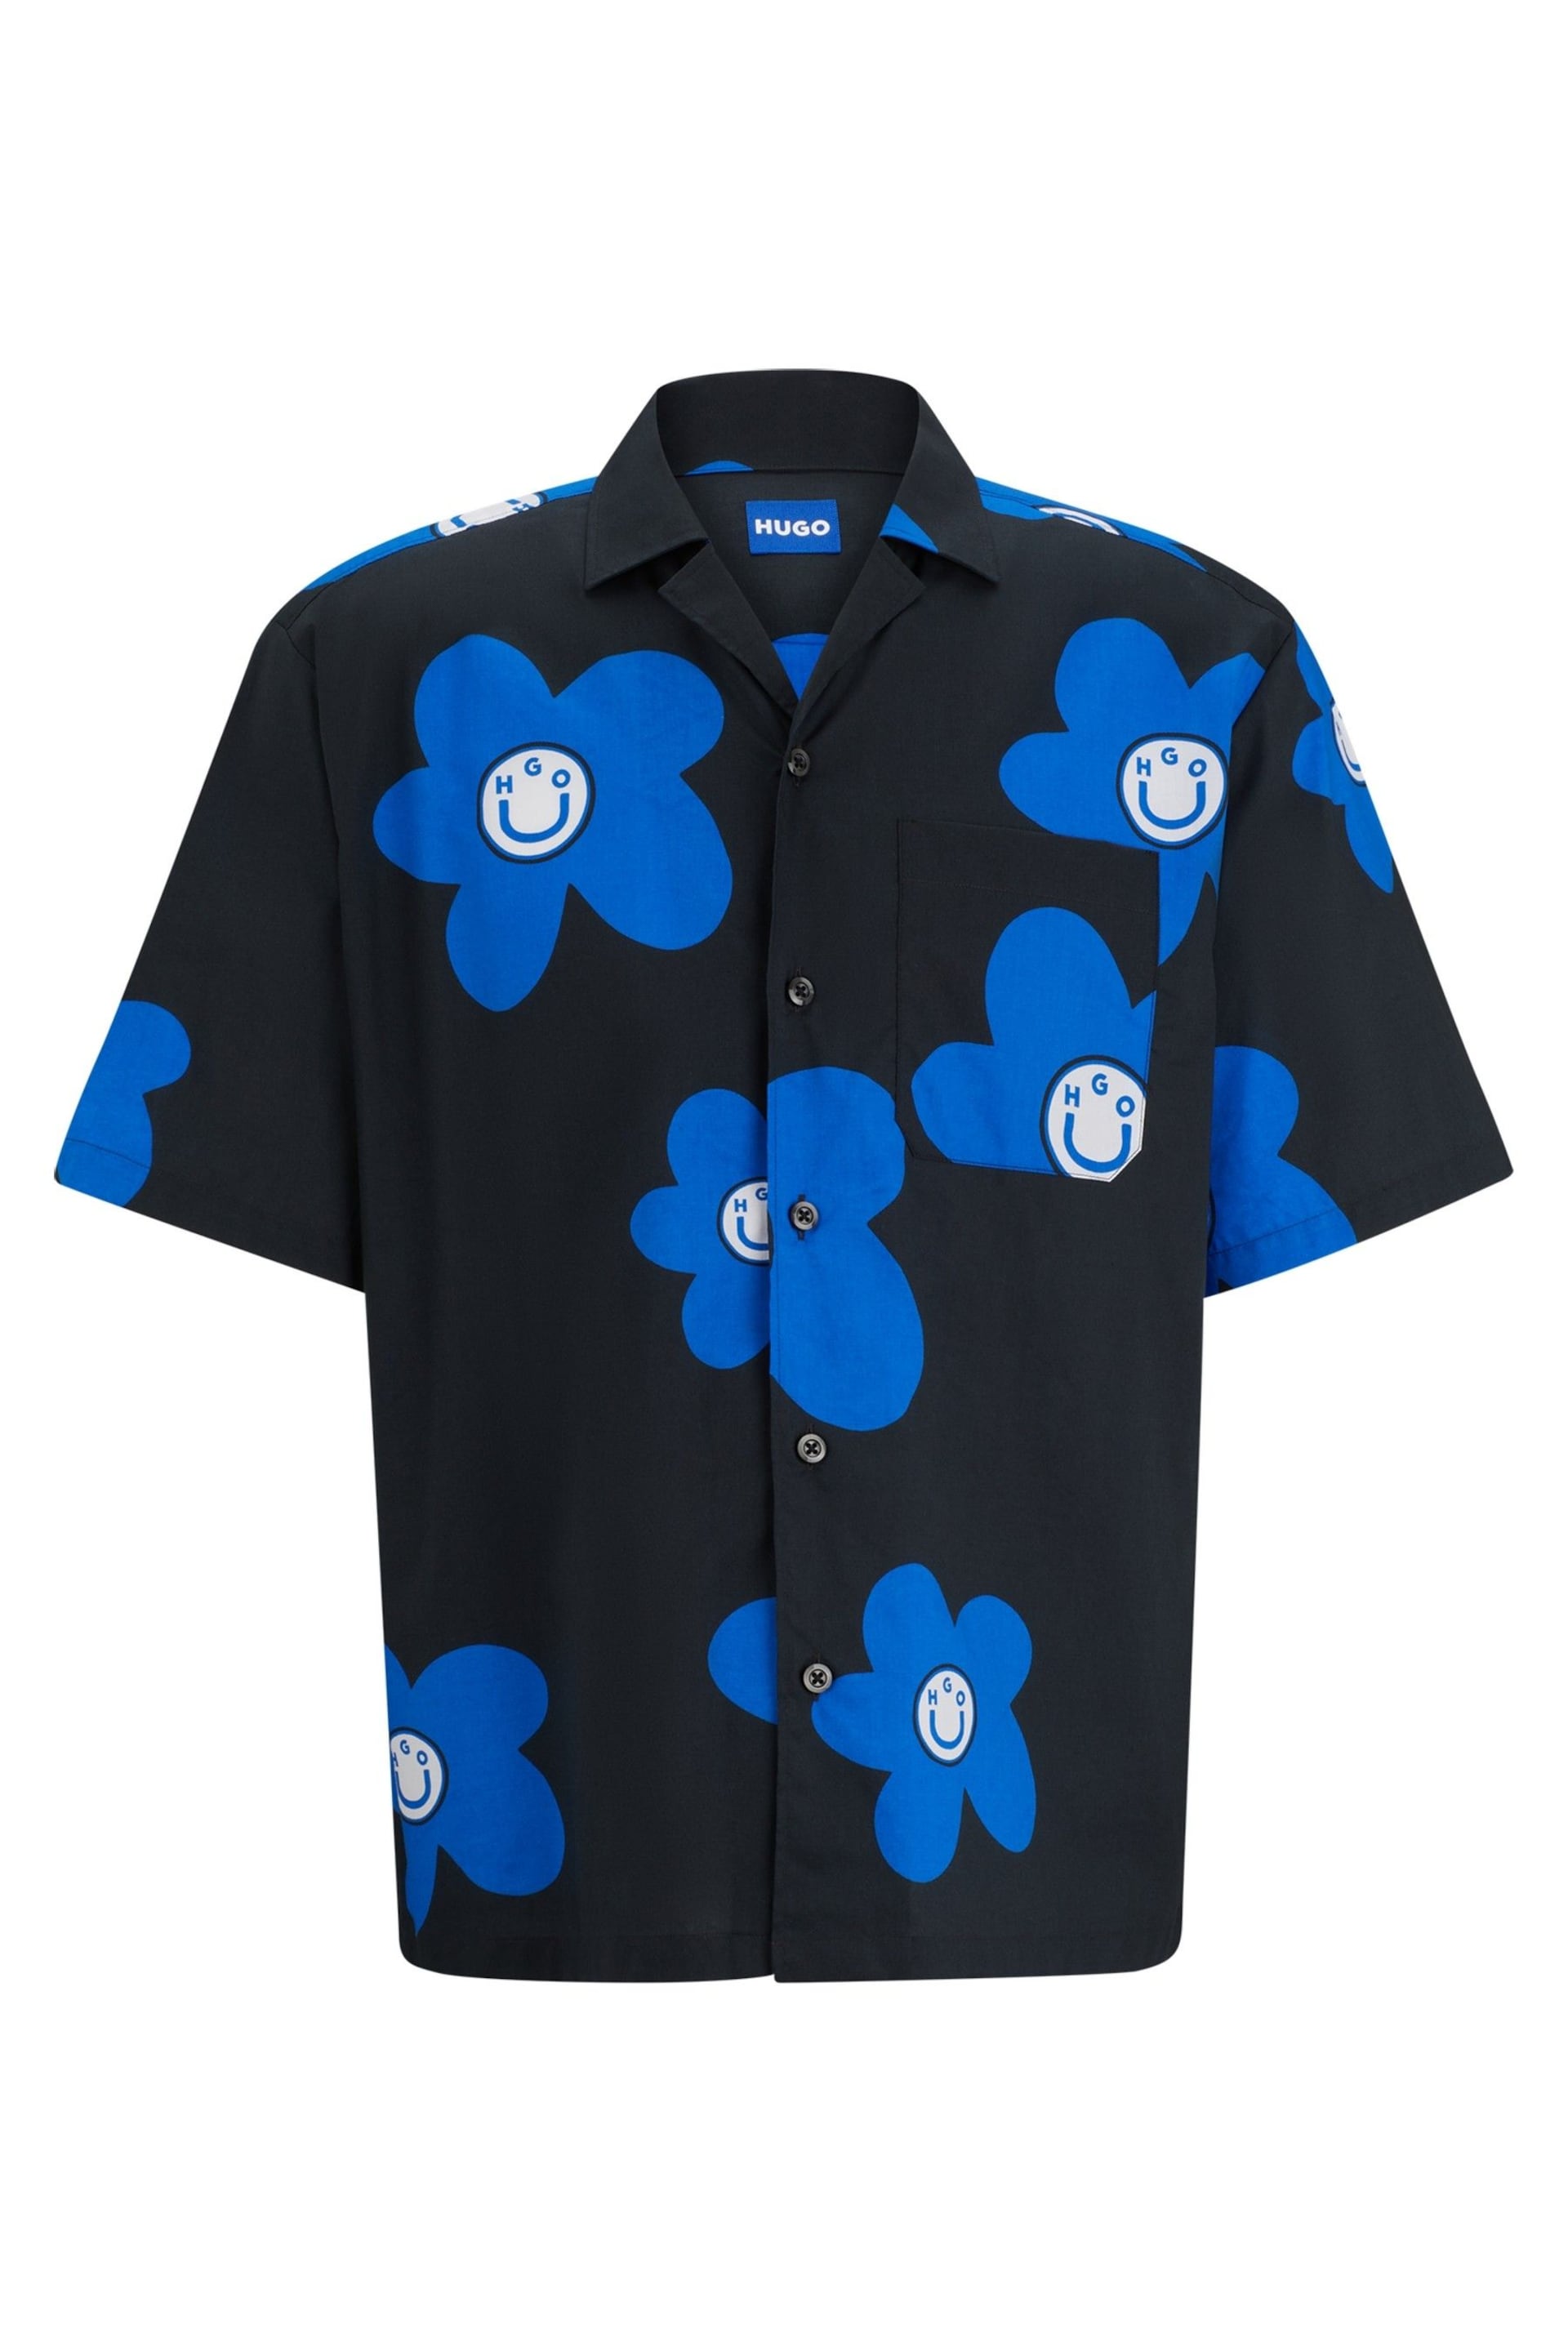 HUGO Blue Oversize Floral Graphic Print Shirt - Image 6 of 6